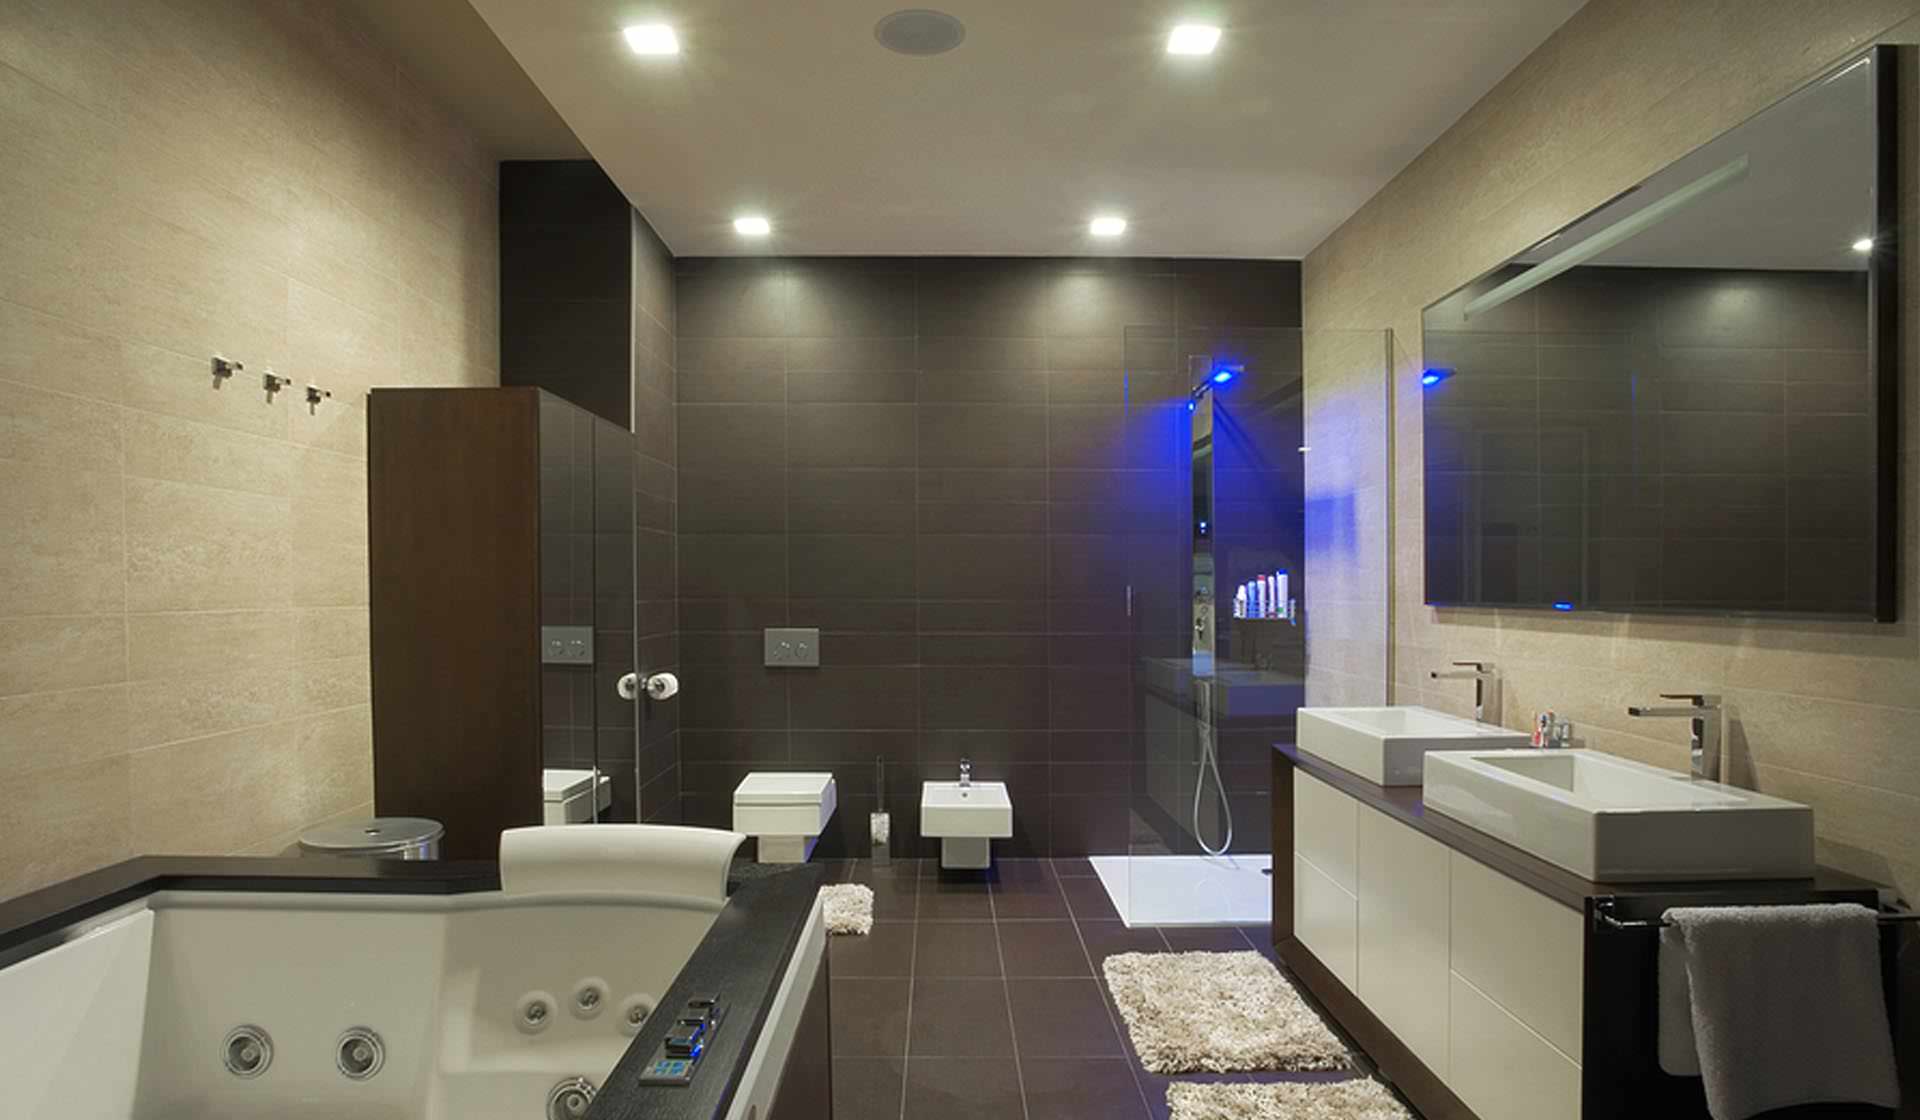 Studio City, CA / Complete Bathroom Remodel